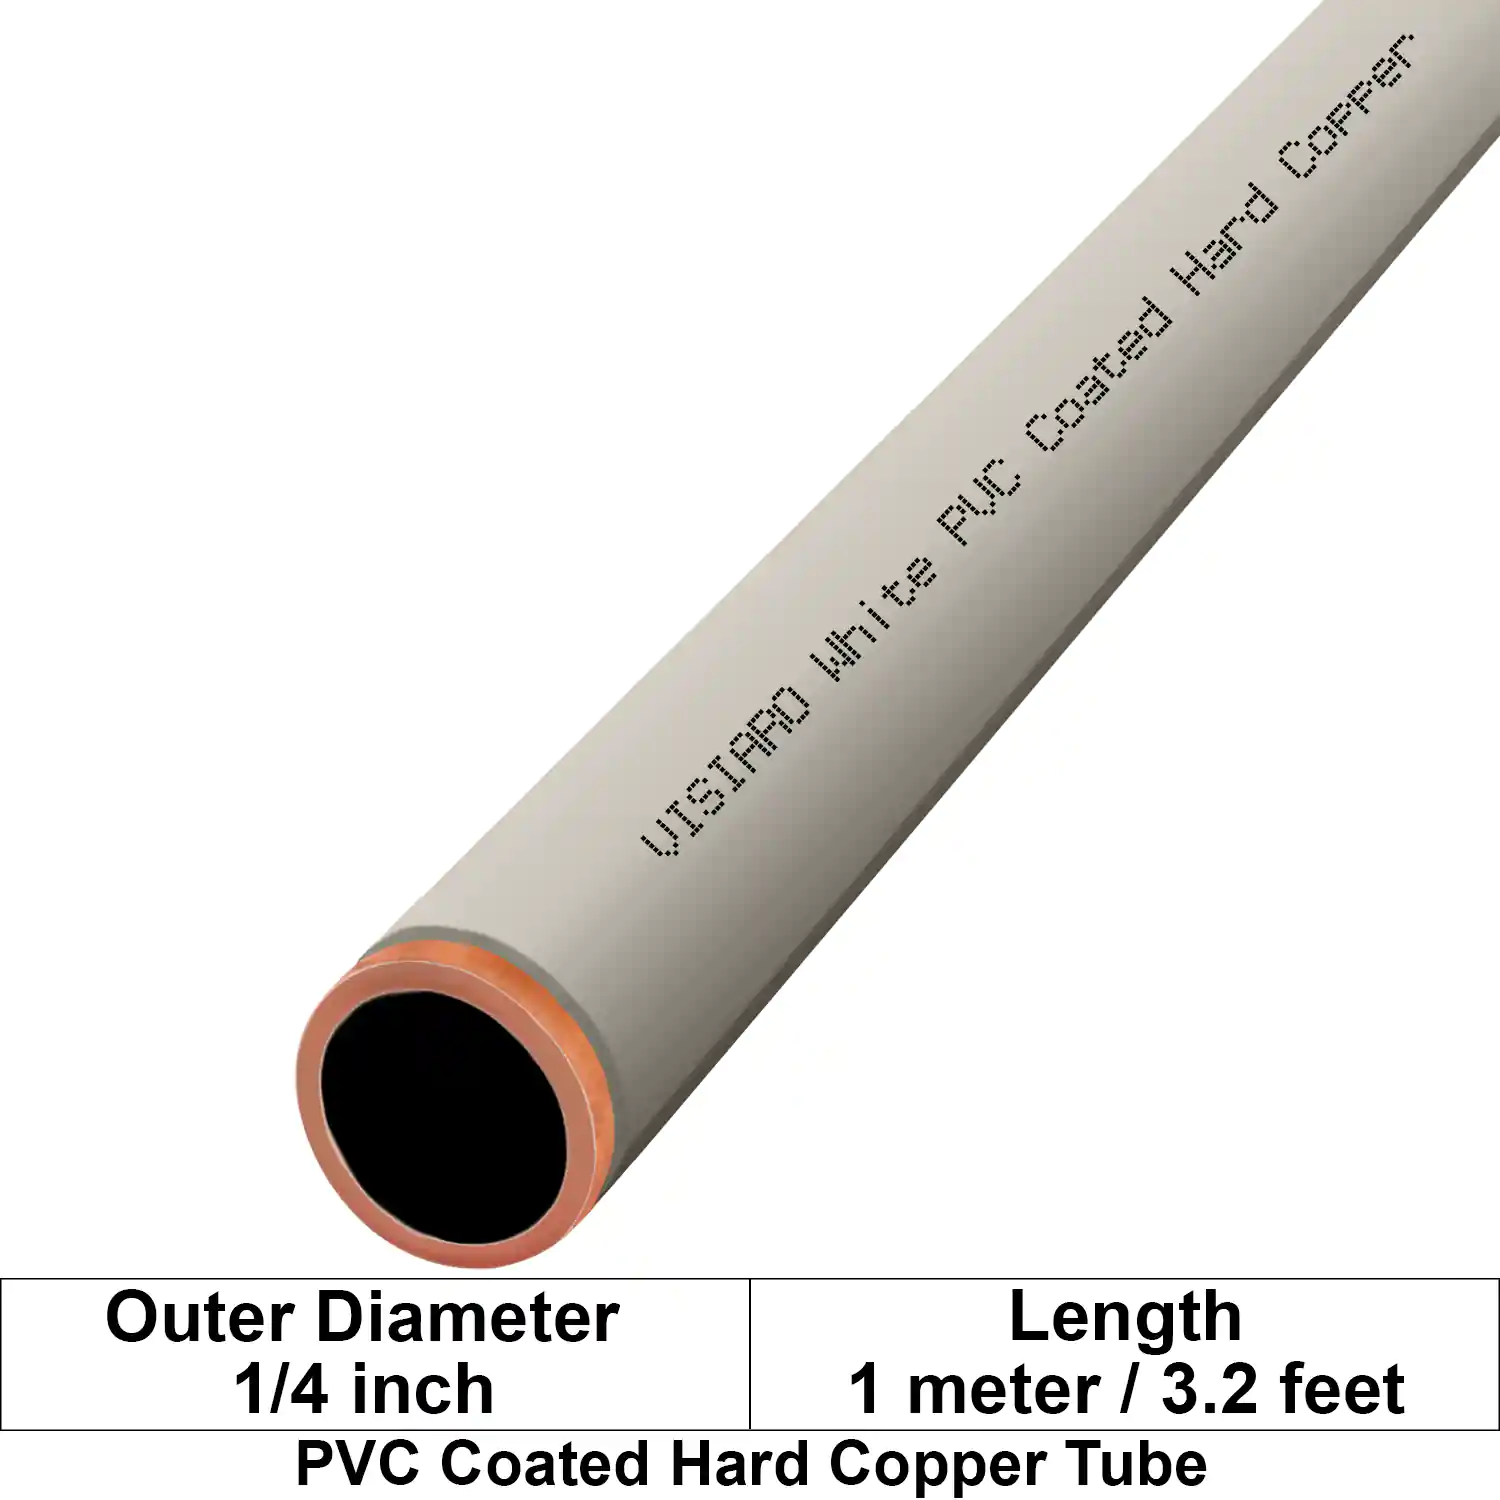 Visiaro White PVC Coated Hard Copper Tube 1mtr long Outer Diameter - 1/4 inch